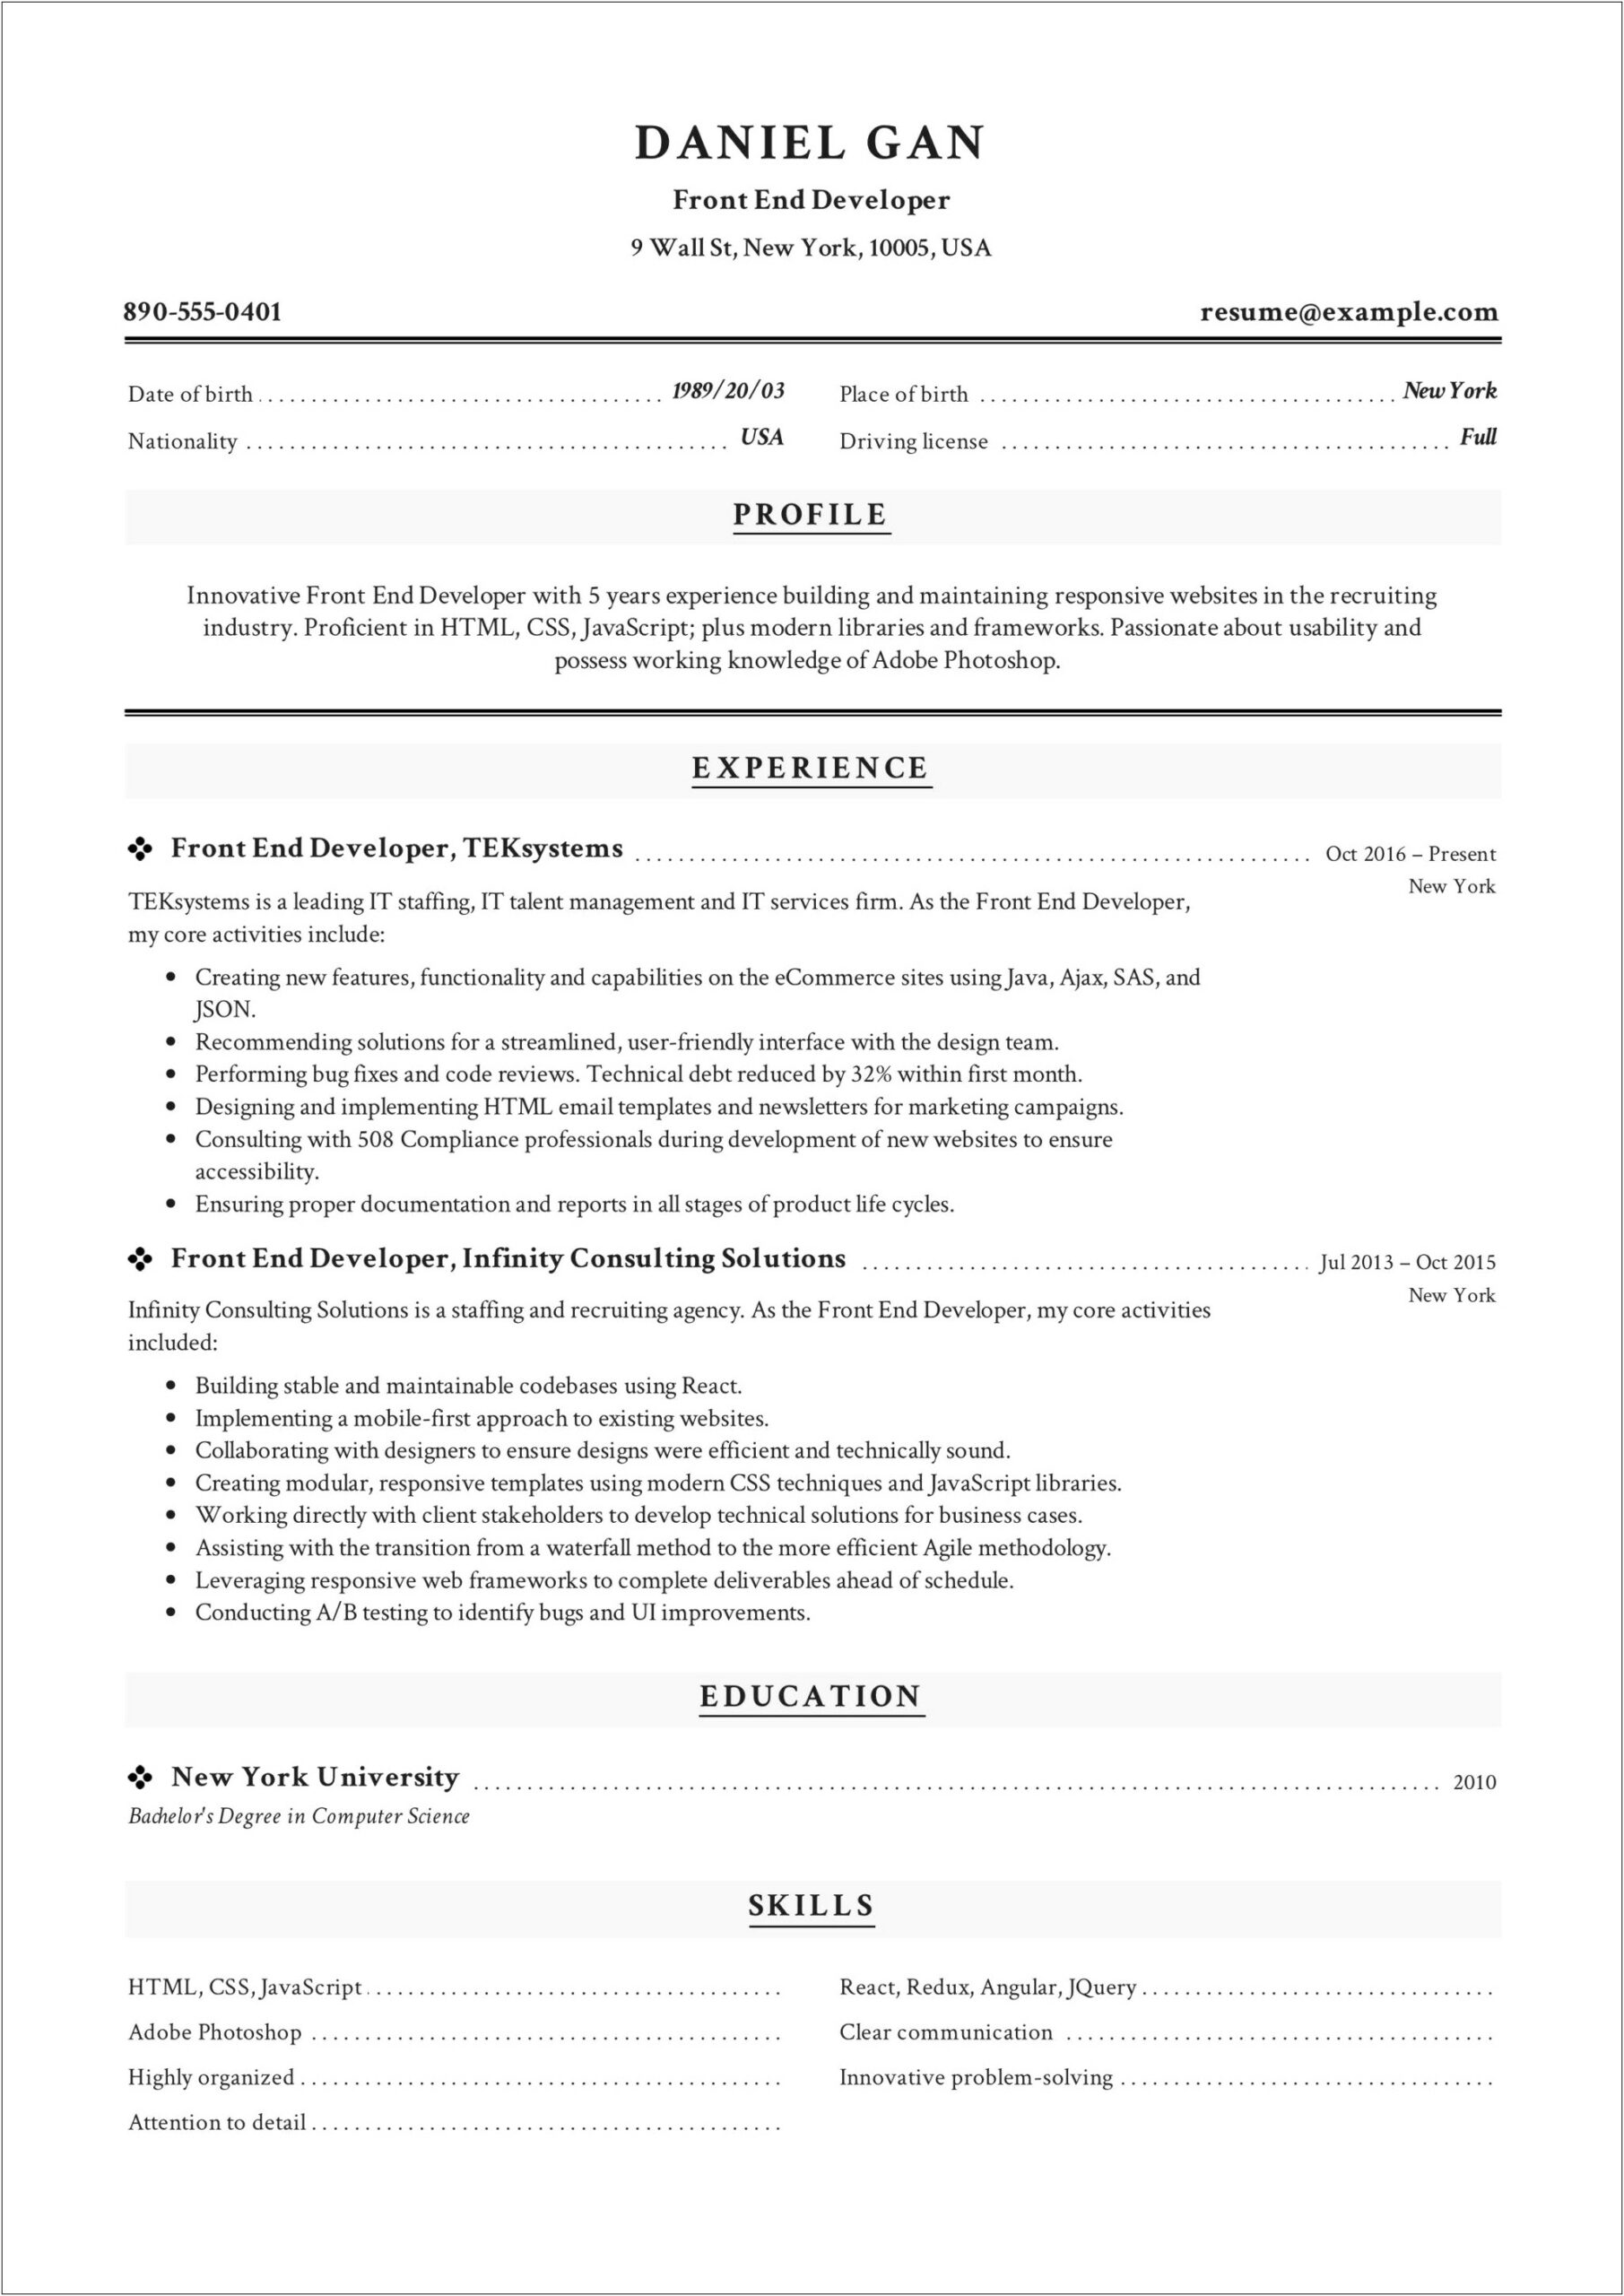 Junior Front End Developer Professional Summary For Resume